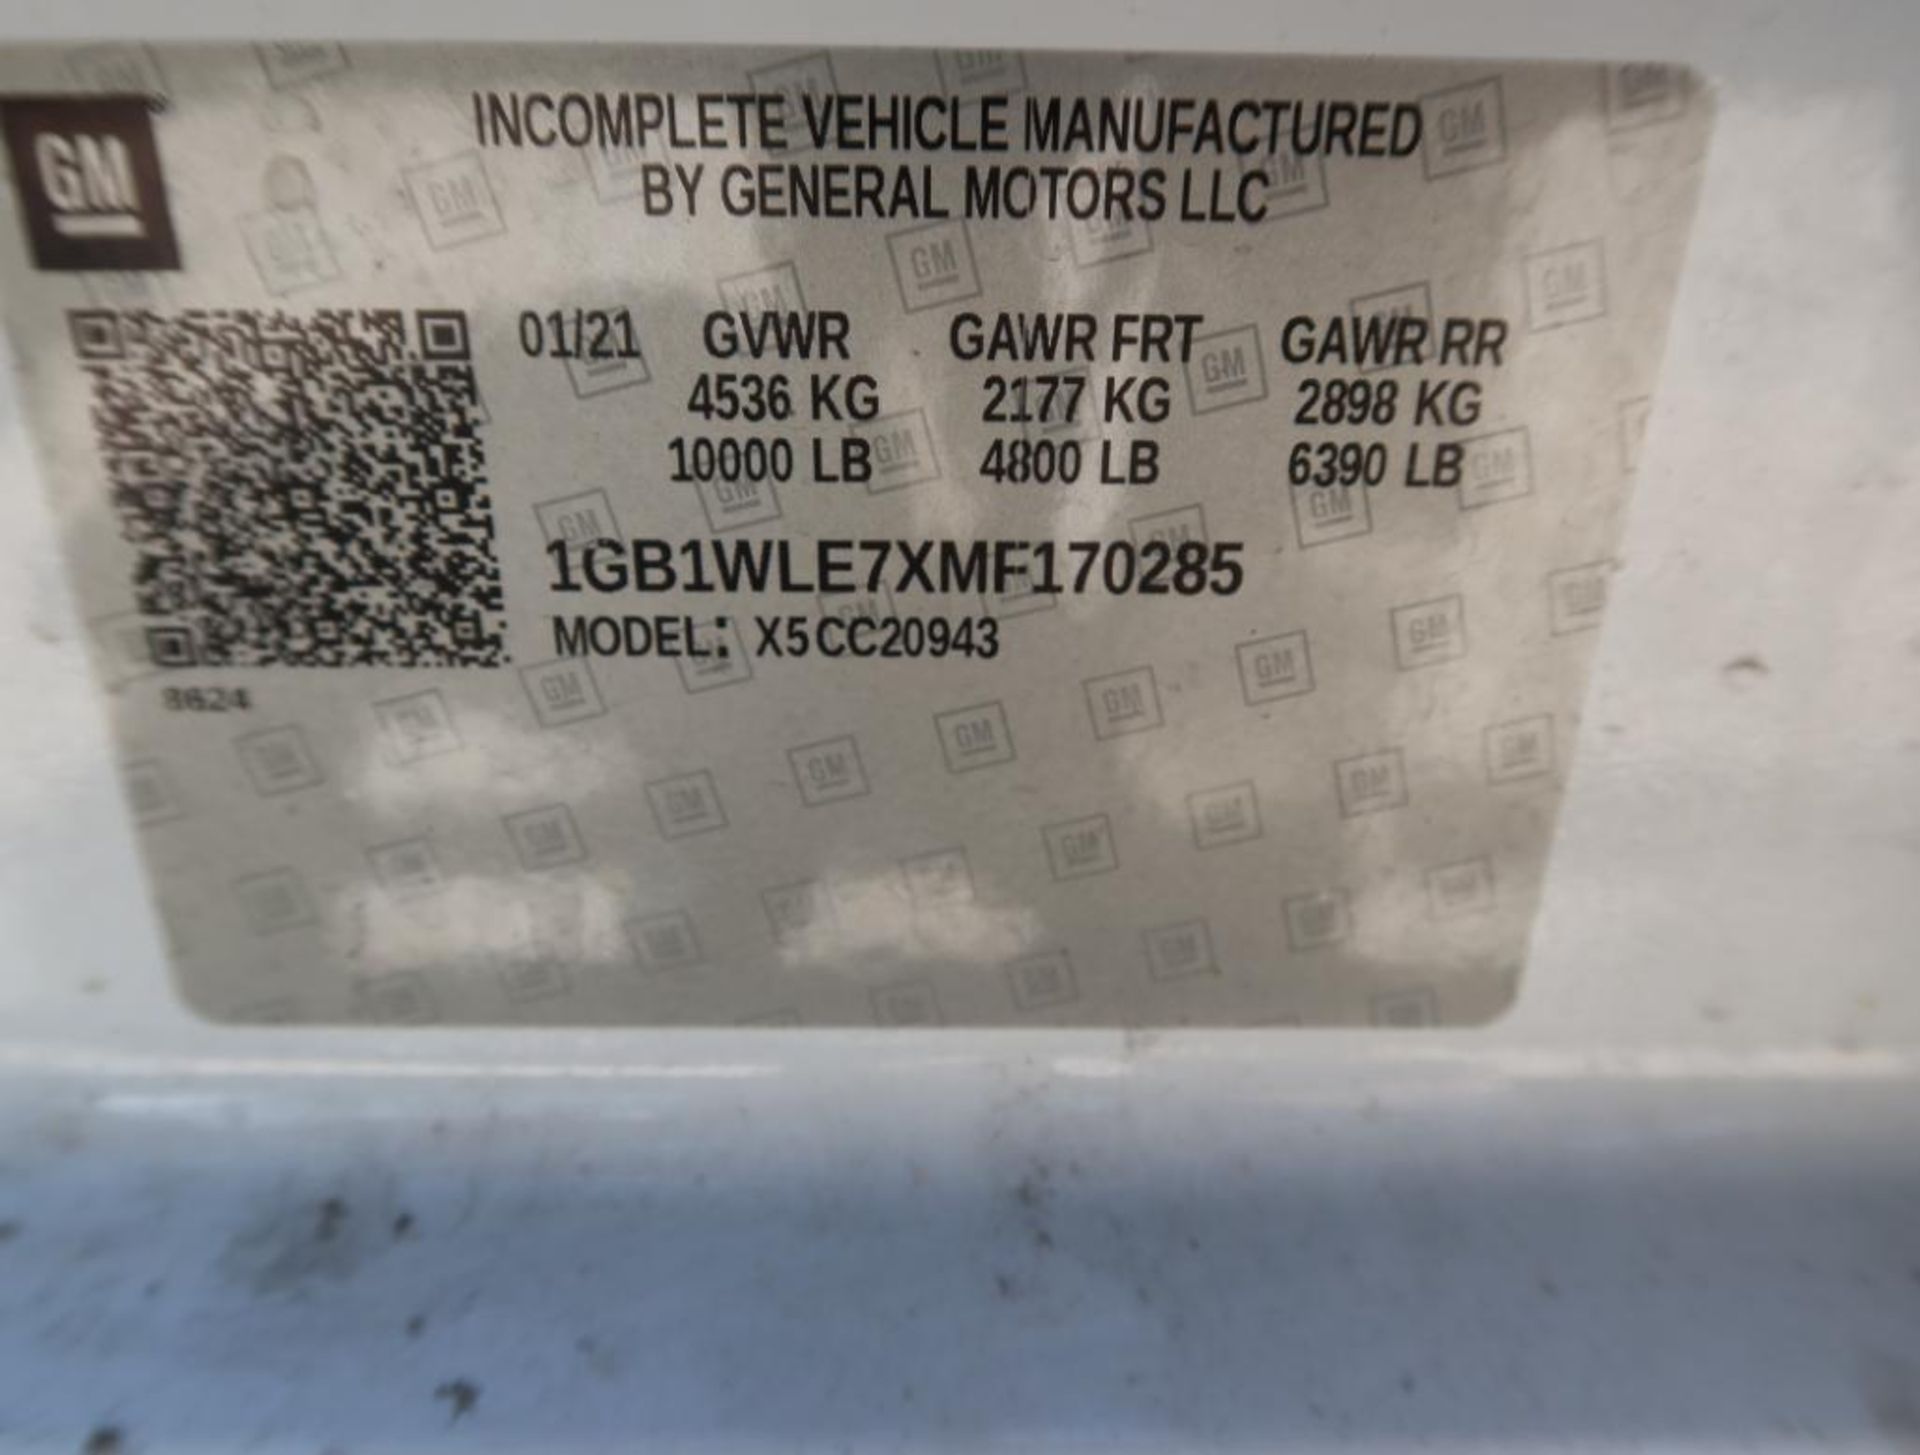 2021 Chevy Silverado 2WD 4 Door Crew Cab Service Body w/Ladder Rack, Gas License# QTJ-P77, VIN 1GB1W - Image 8 of 8